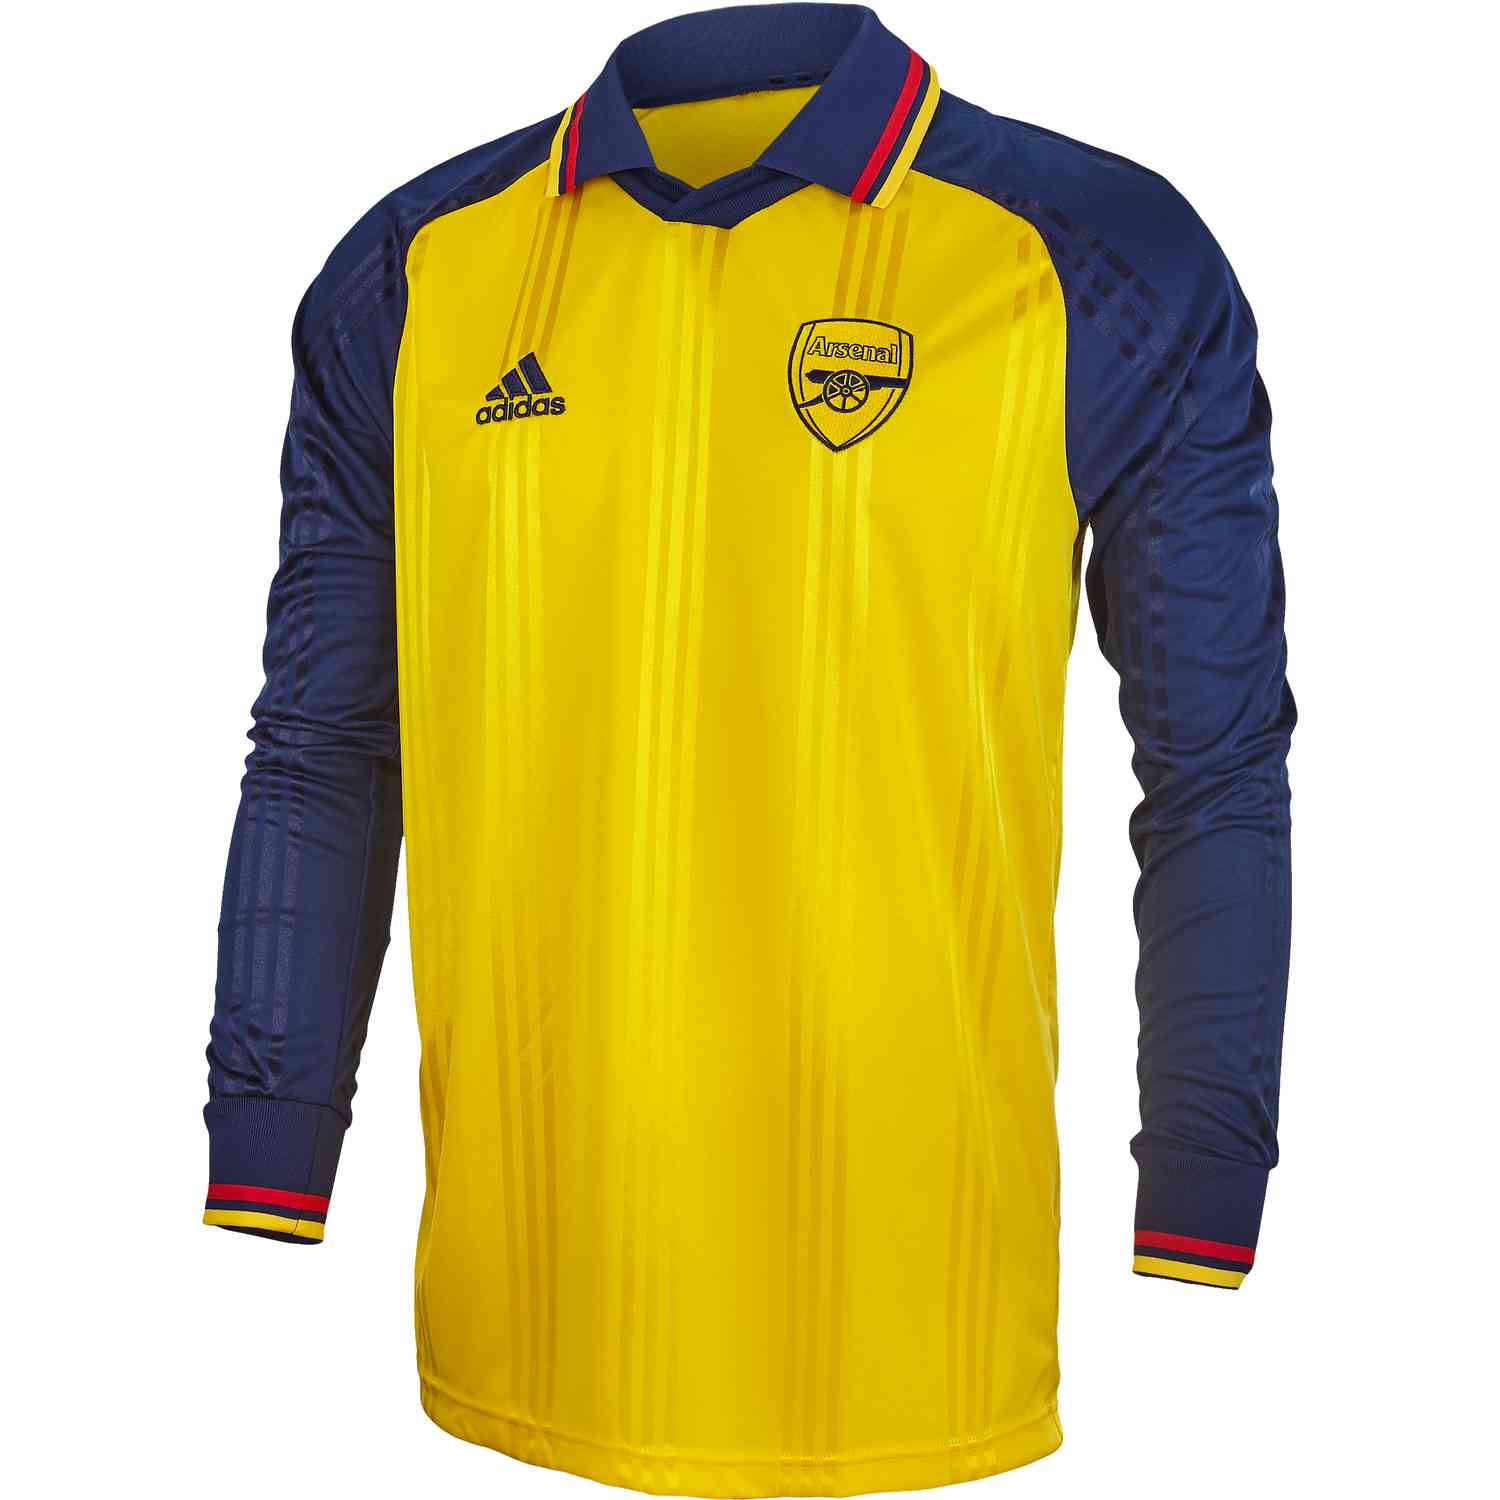 retro yellow arsenal shirt